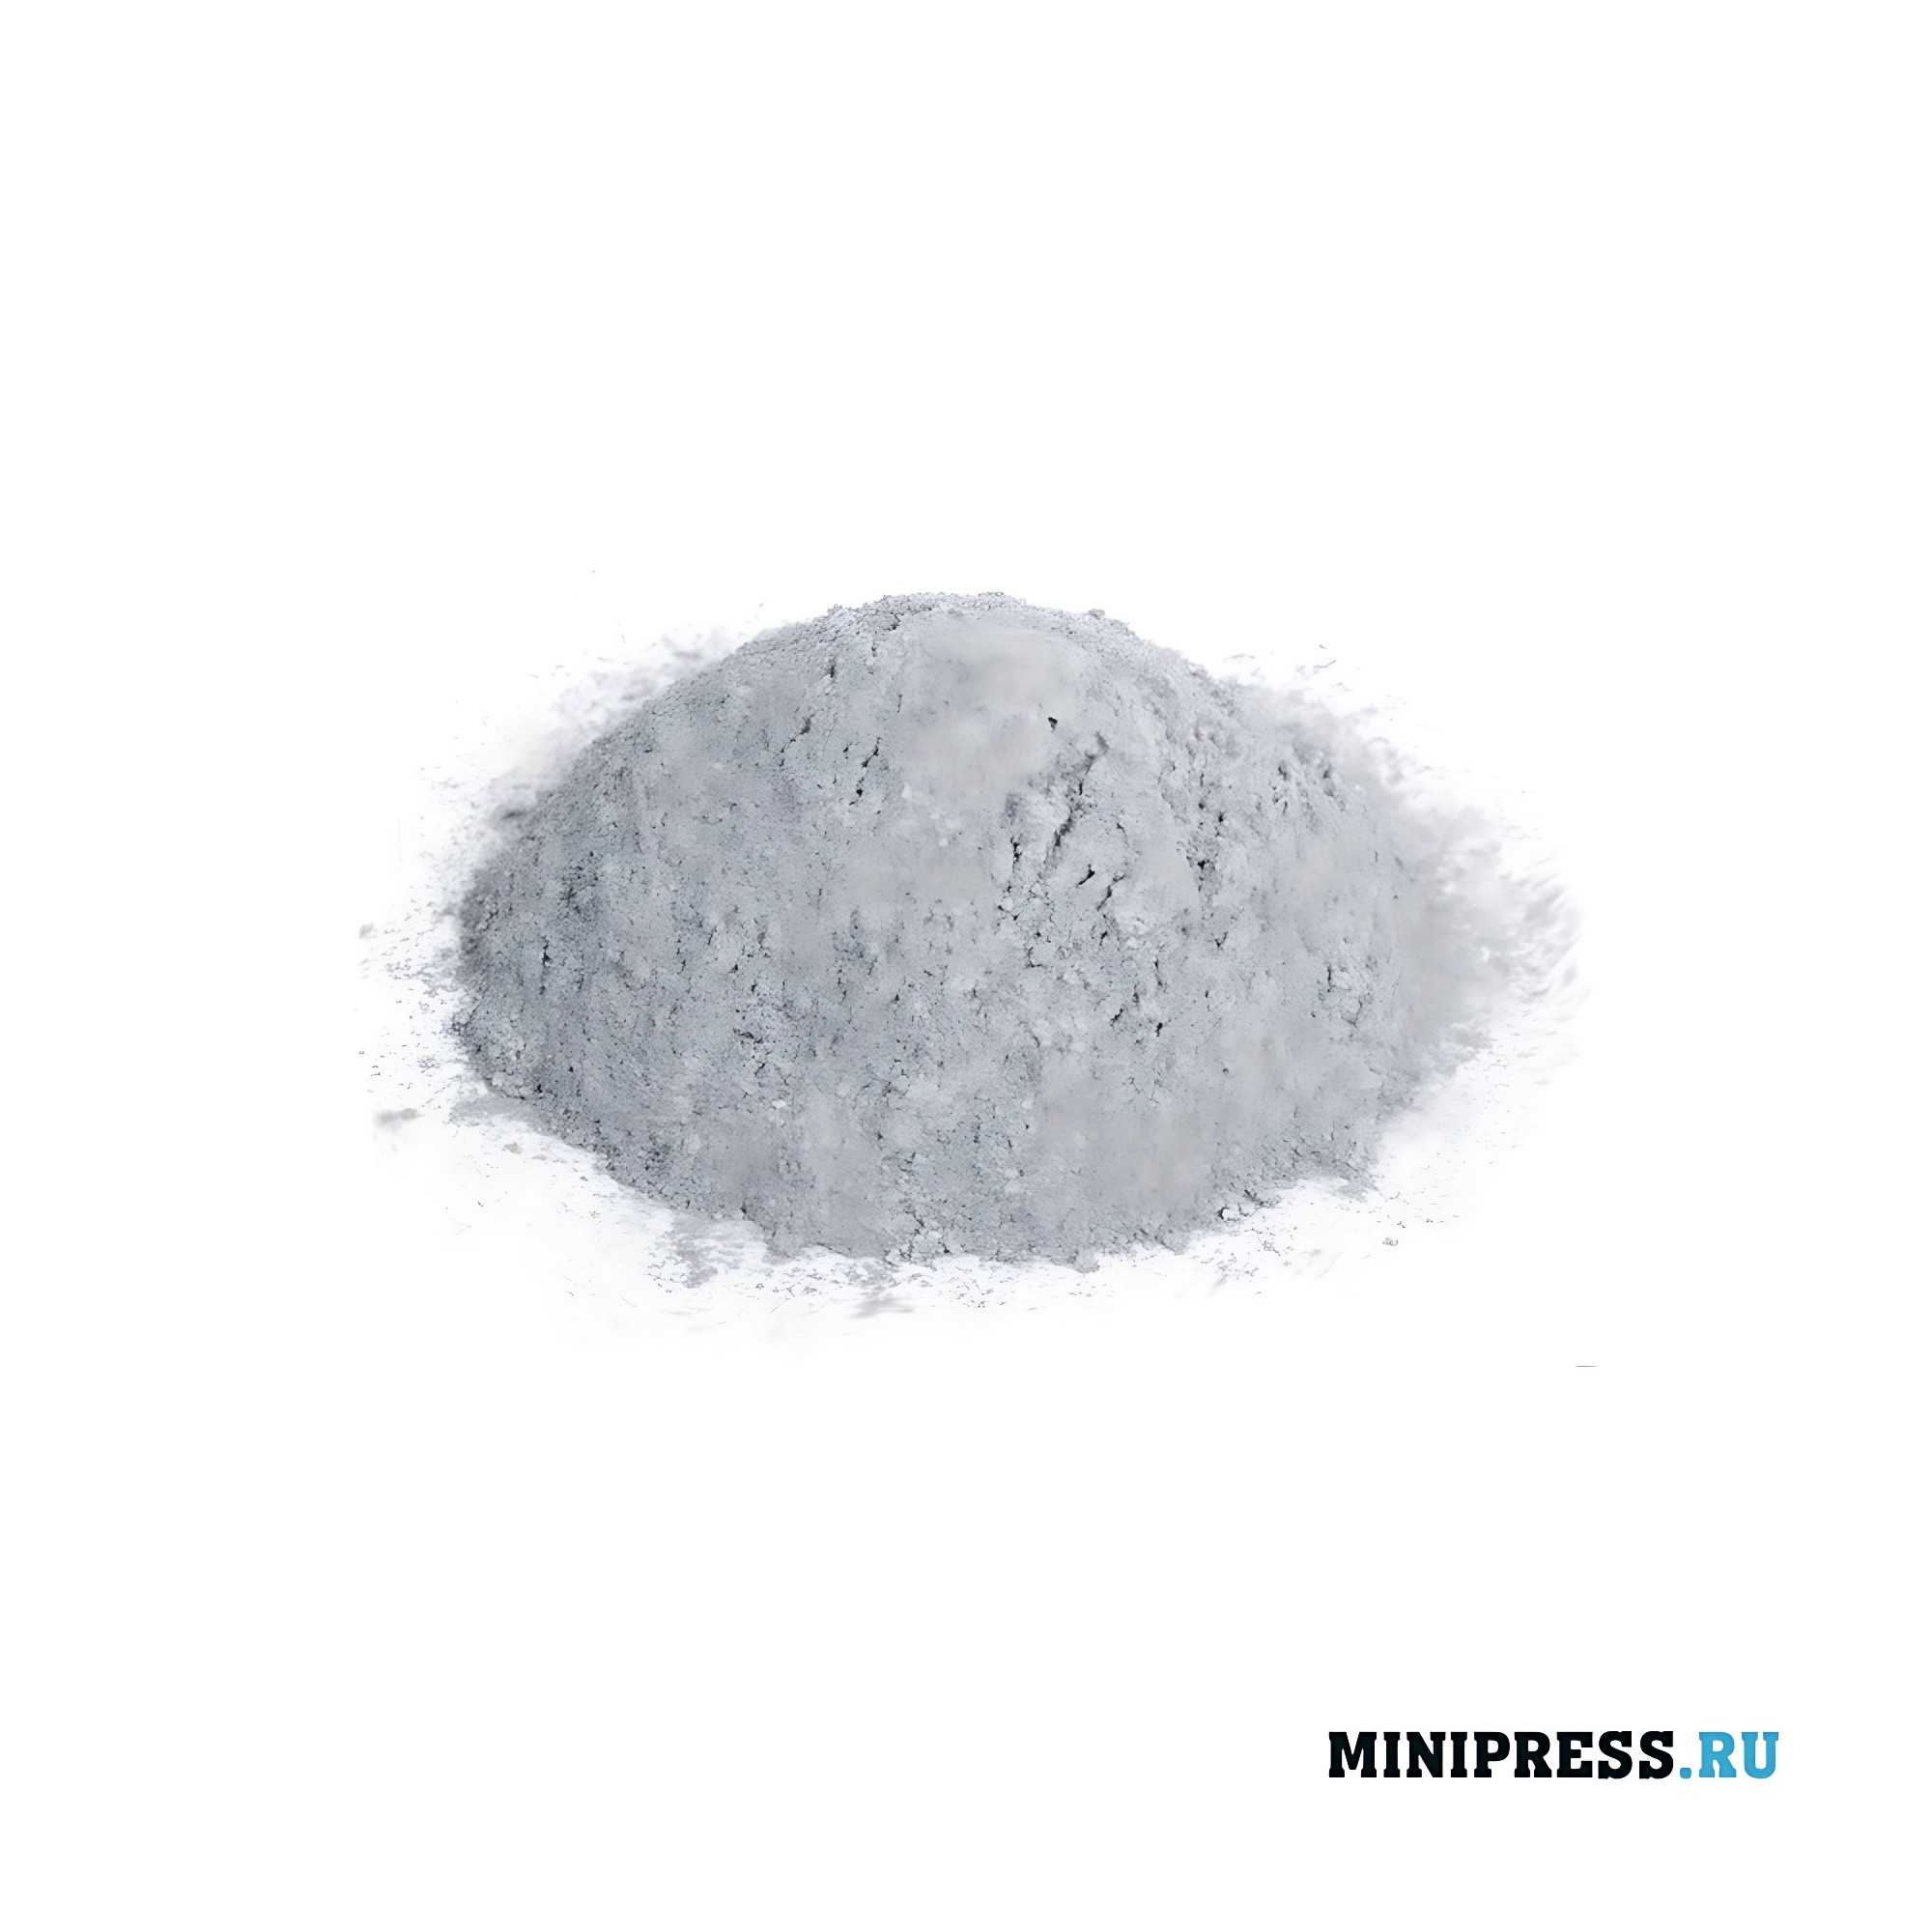 Multifunctional experimental pharmaceutical equipment and V-shaped powder mixer UNIT 2